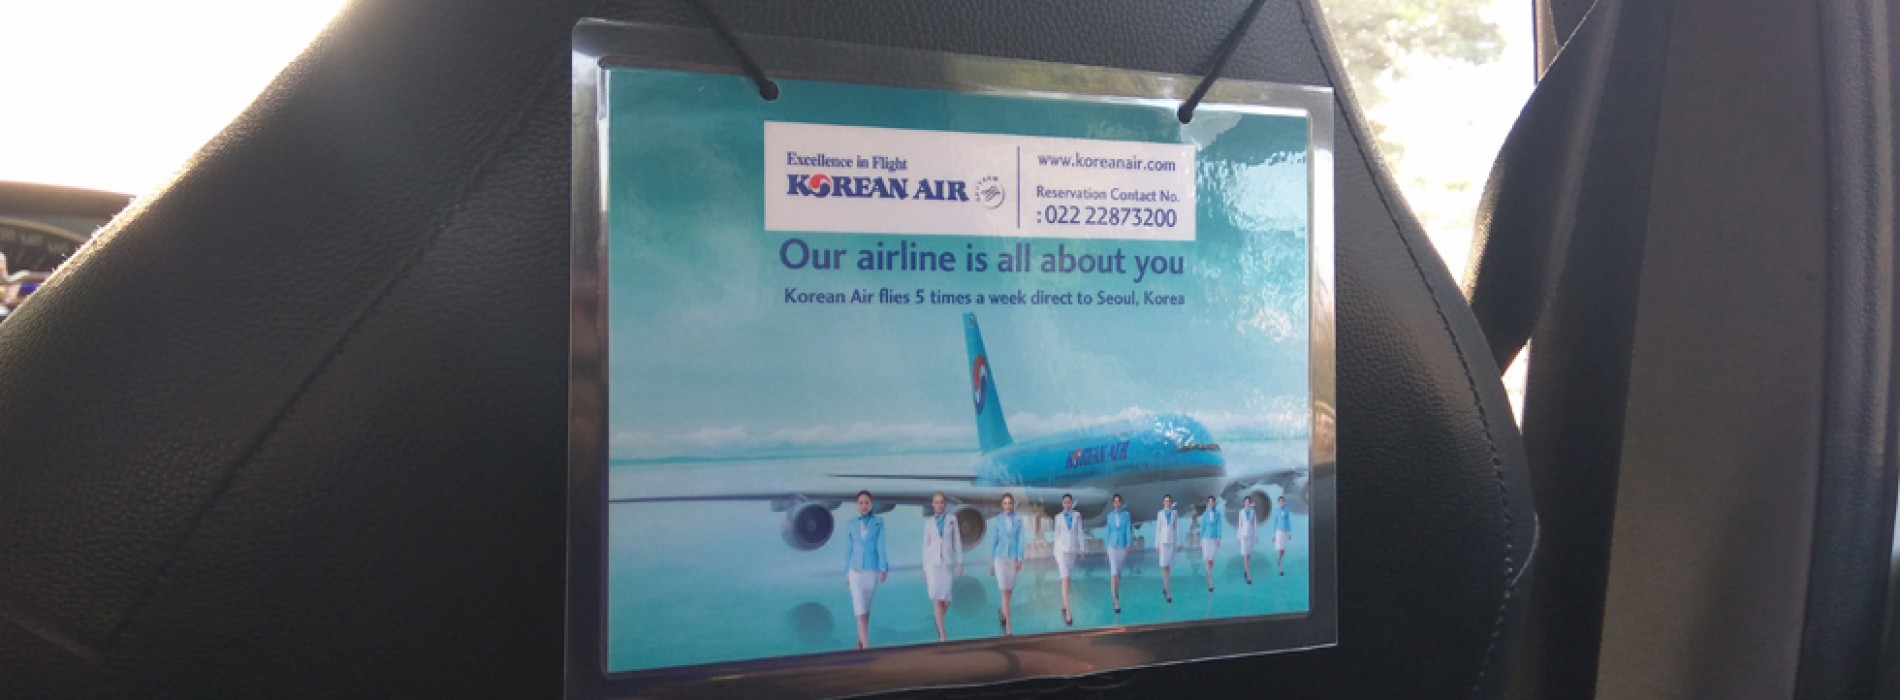 Korean Air and Korea Tourism Organisation (KTO’s) joint marketing initiative